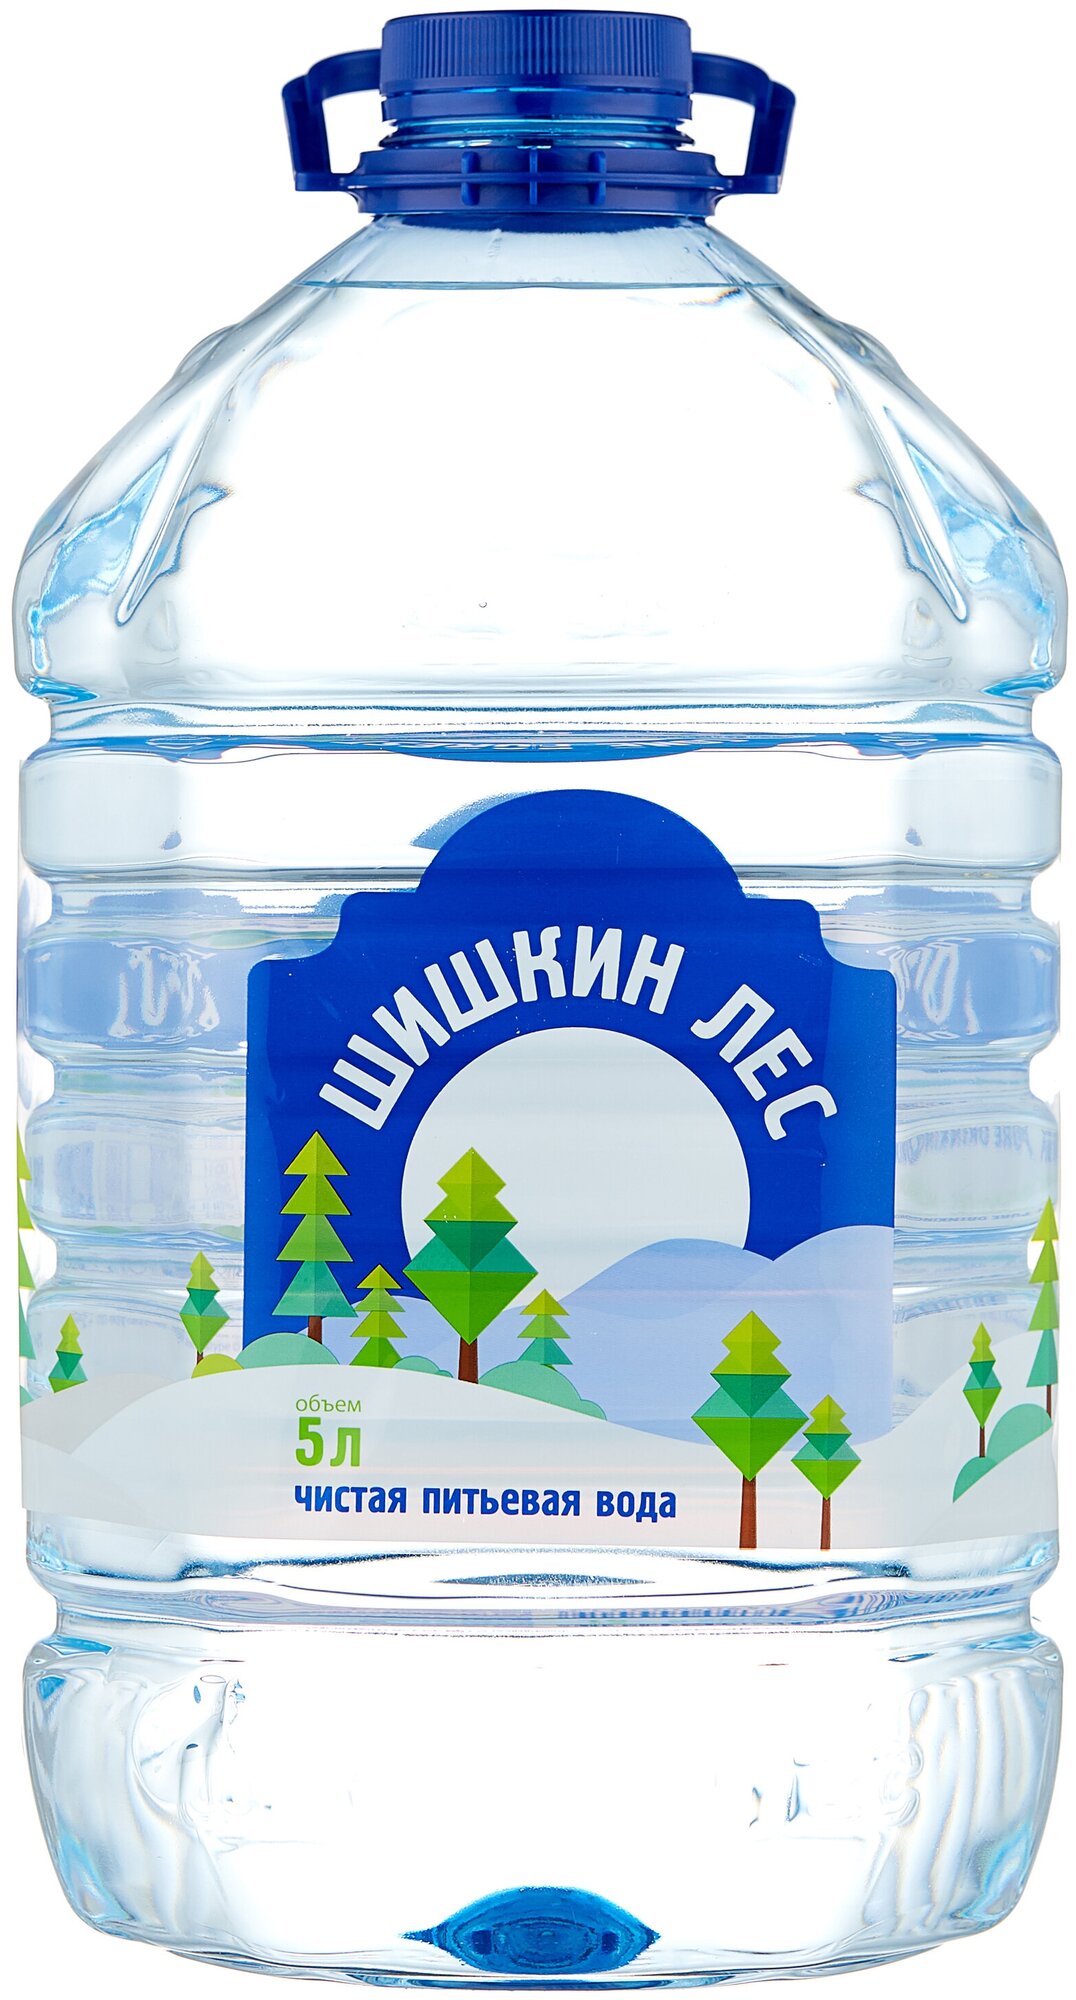 Питьевая вода шишкин ЛЕС, 5 л